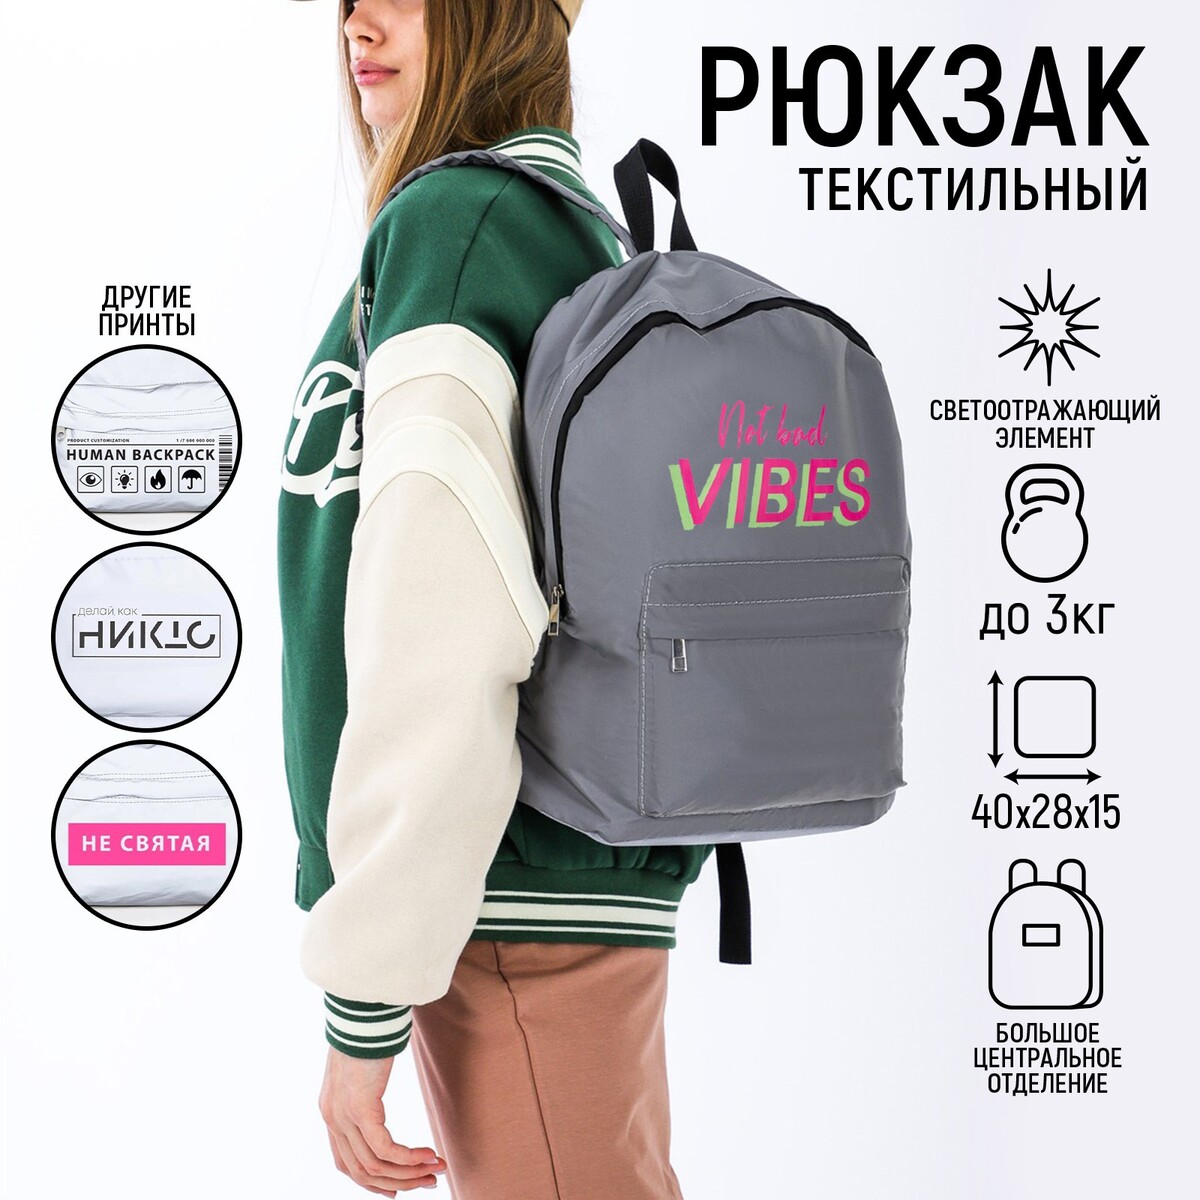 Рюкзак текстильный светоотражающий, not bad vibes, 42 х 30 х 12см NAZAMOK